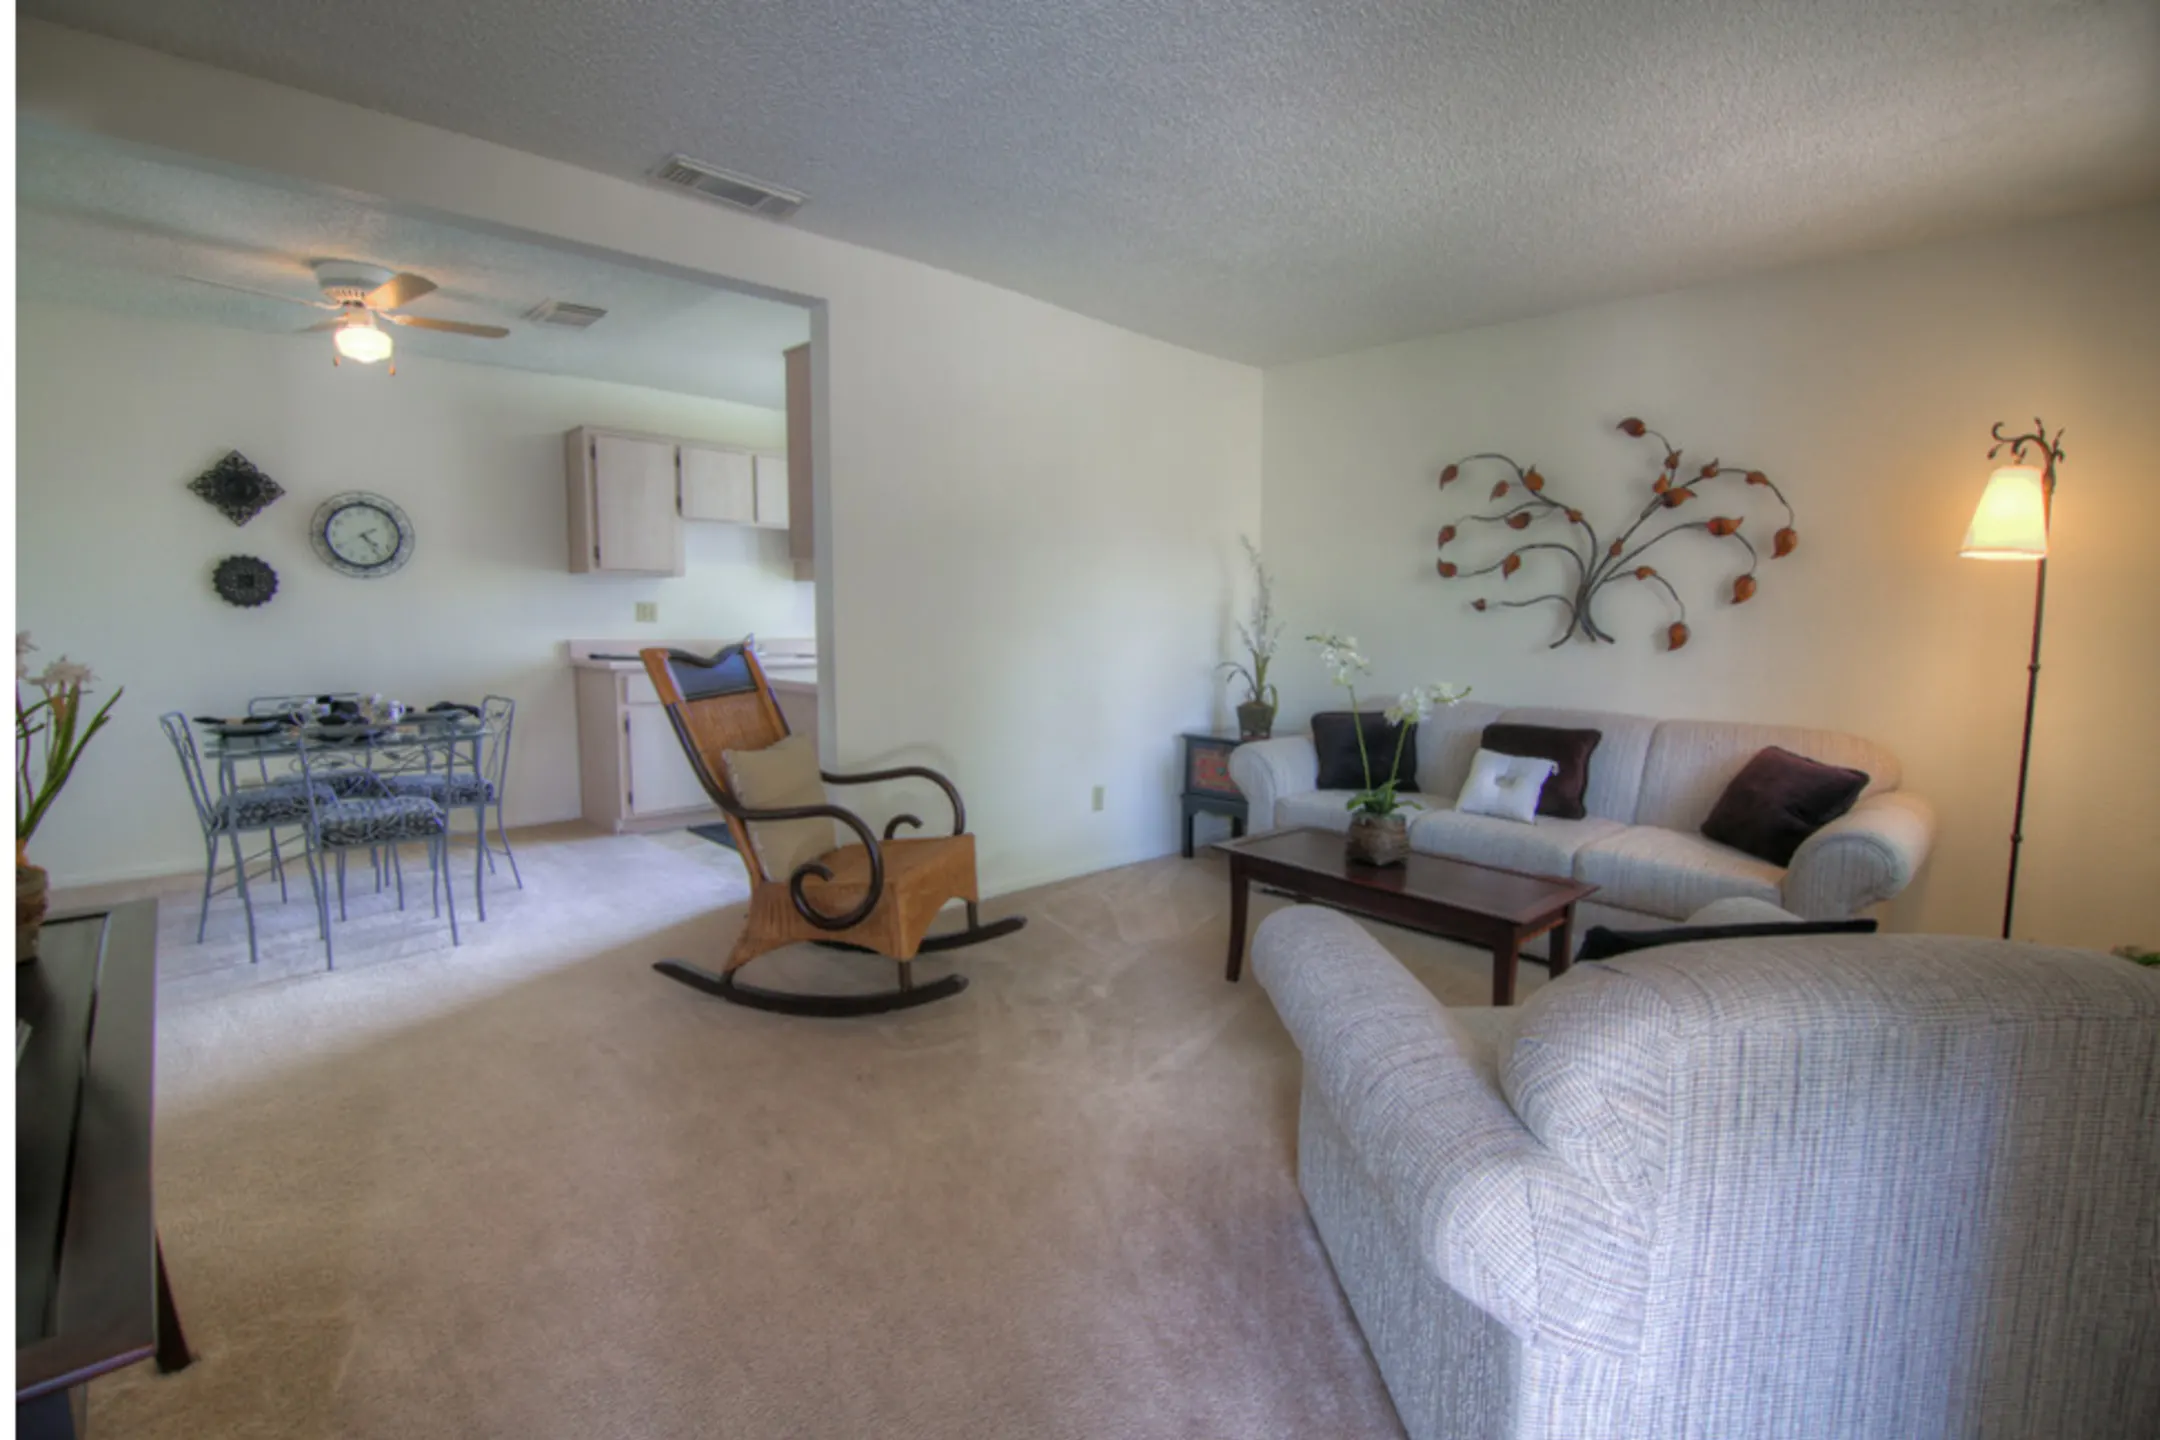 Living Room - Country Club Terrace - Flagstaff, AZ